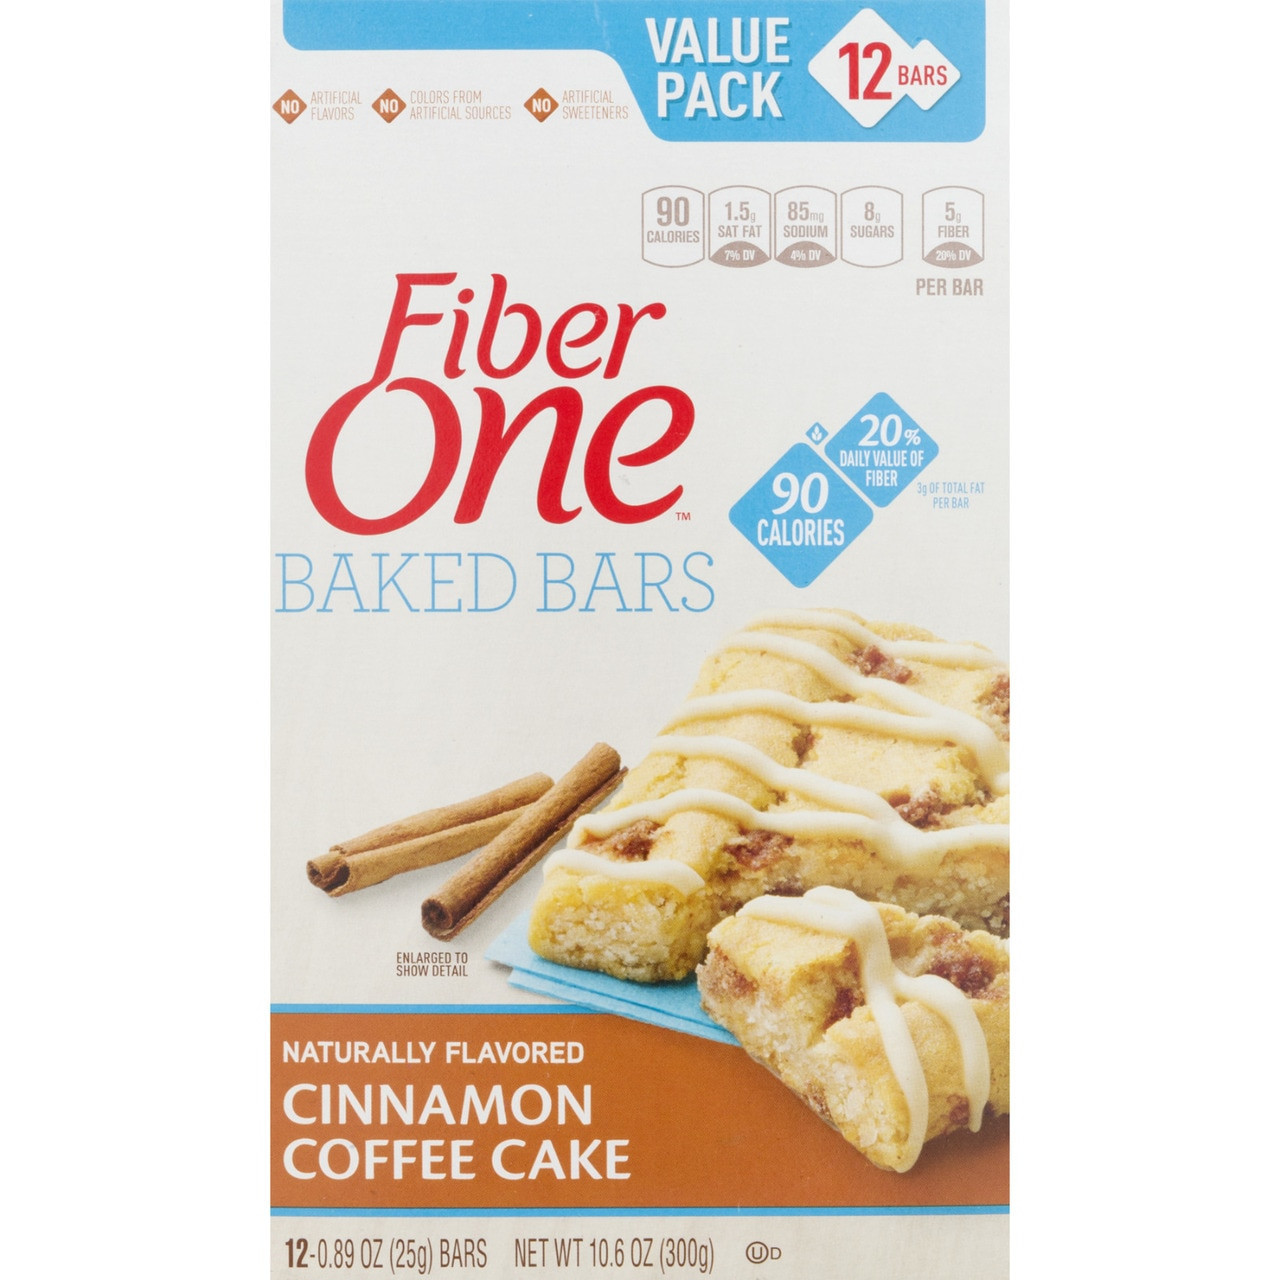 Fiber One Cinnamon Coffee Cake
 Fiber e Cinnamon Coffee Cake Baked Bars Value Pack